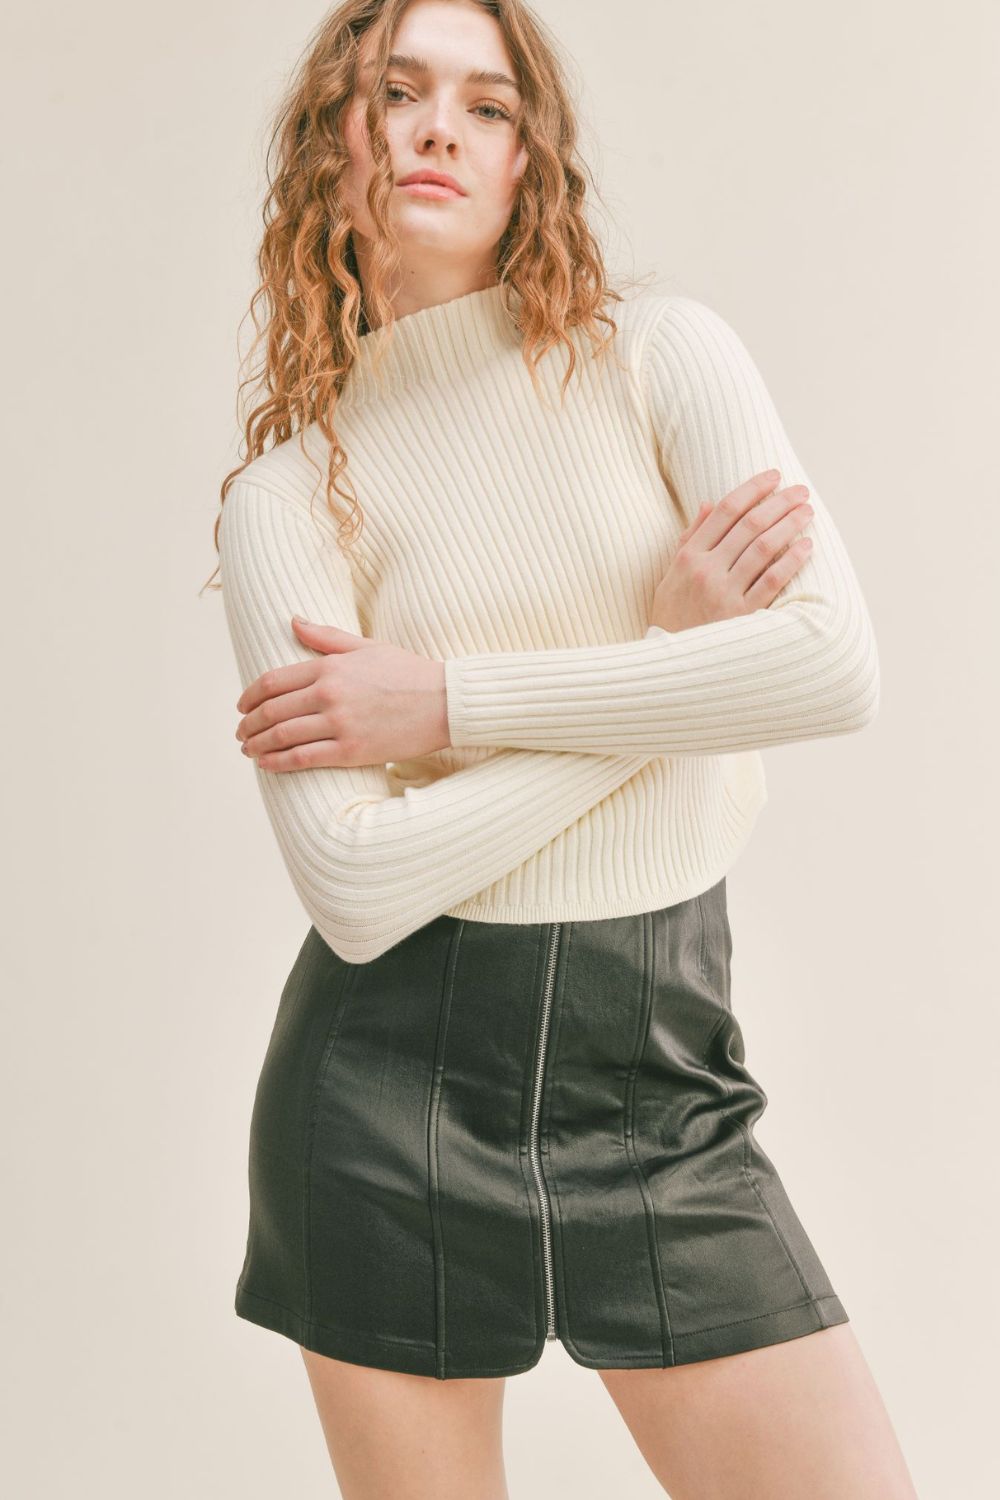 Women's Basic Rib Knit Layer Sweater | Ivory - Women's Shirts & Tops - Blooming Daily